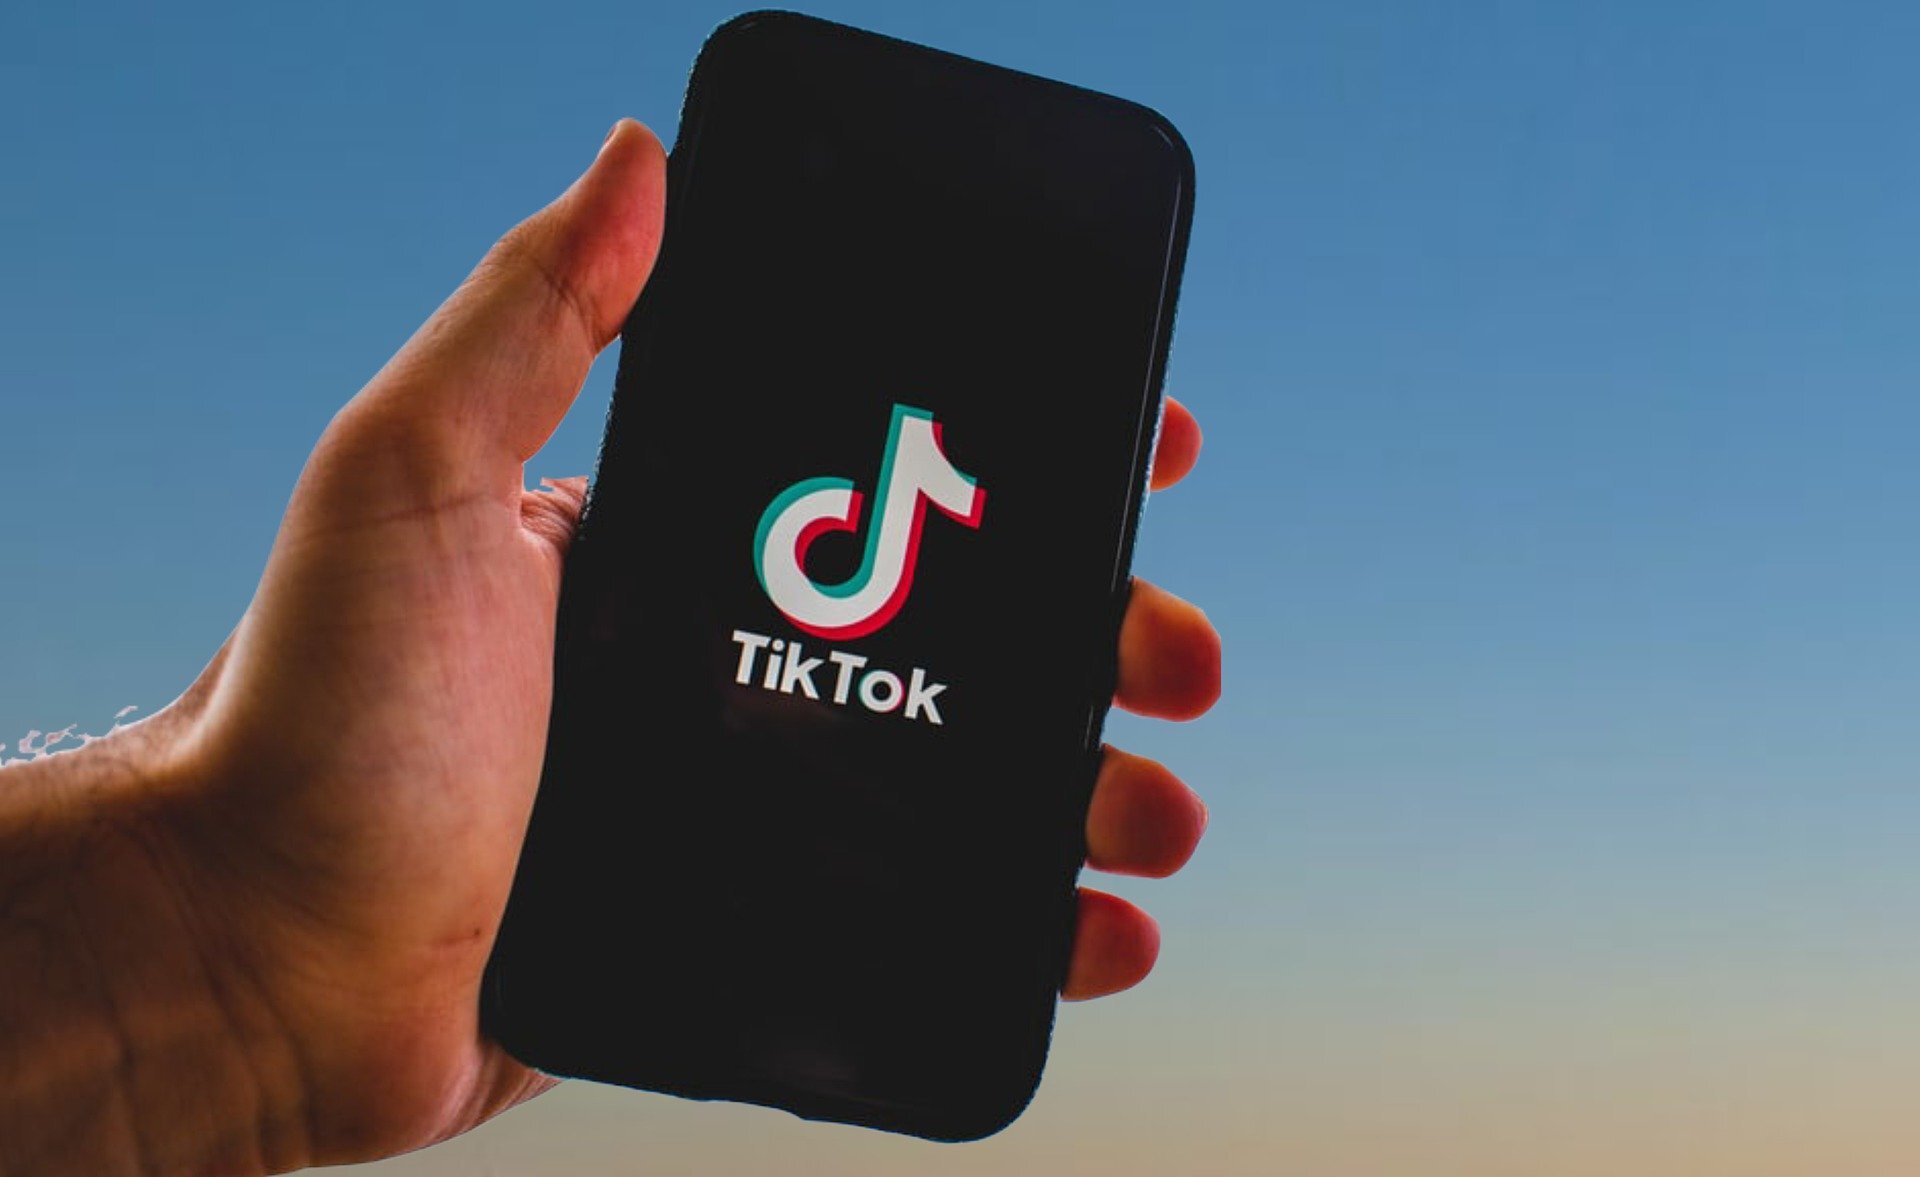 To TikTok ετοιμάζεται να καταθέσει αγωγή κατά του Donald Trump